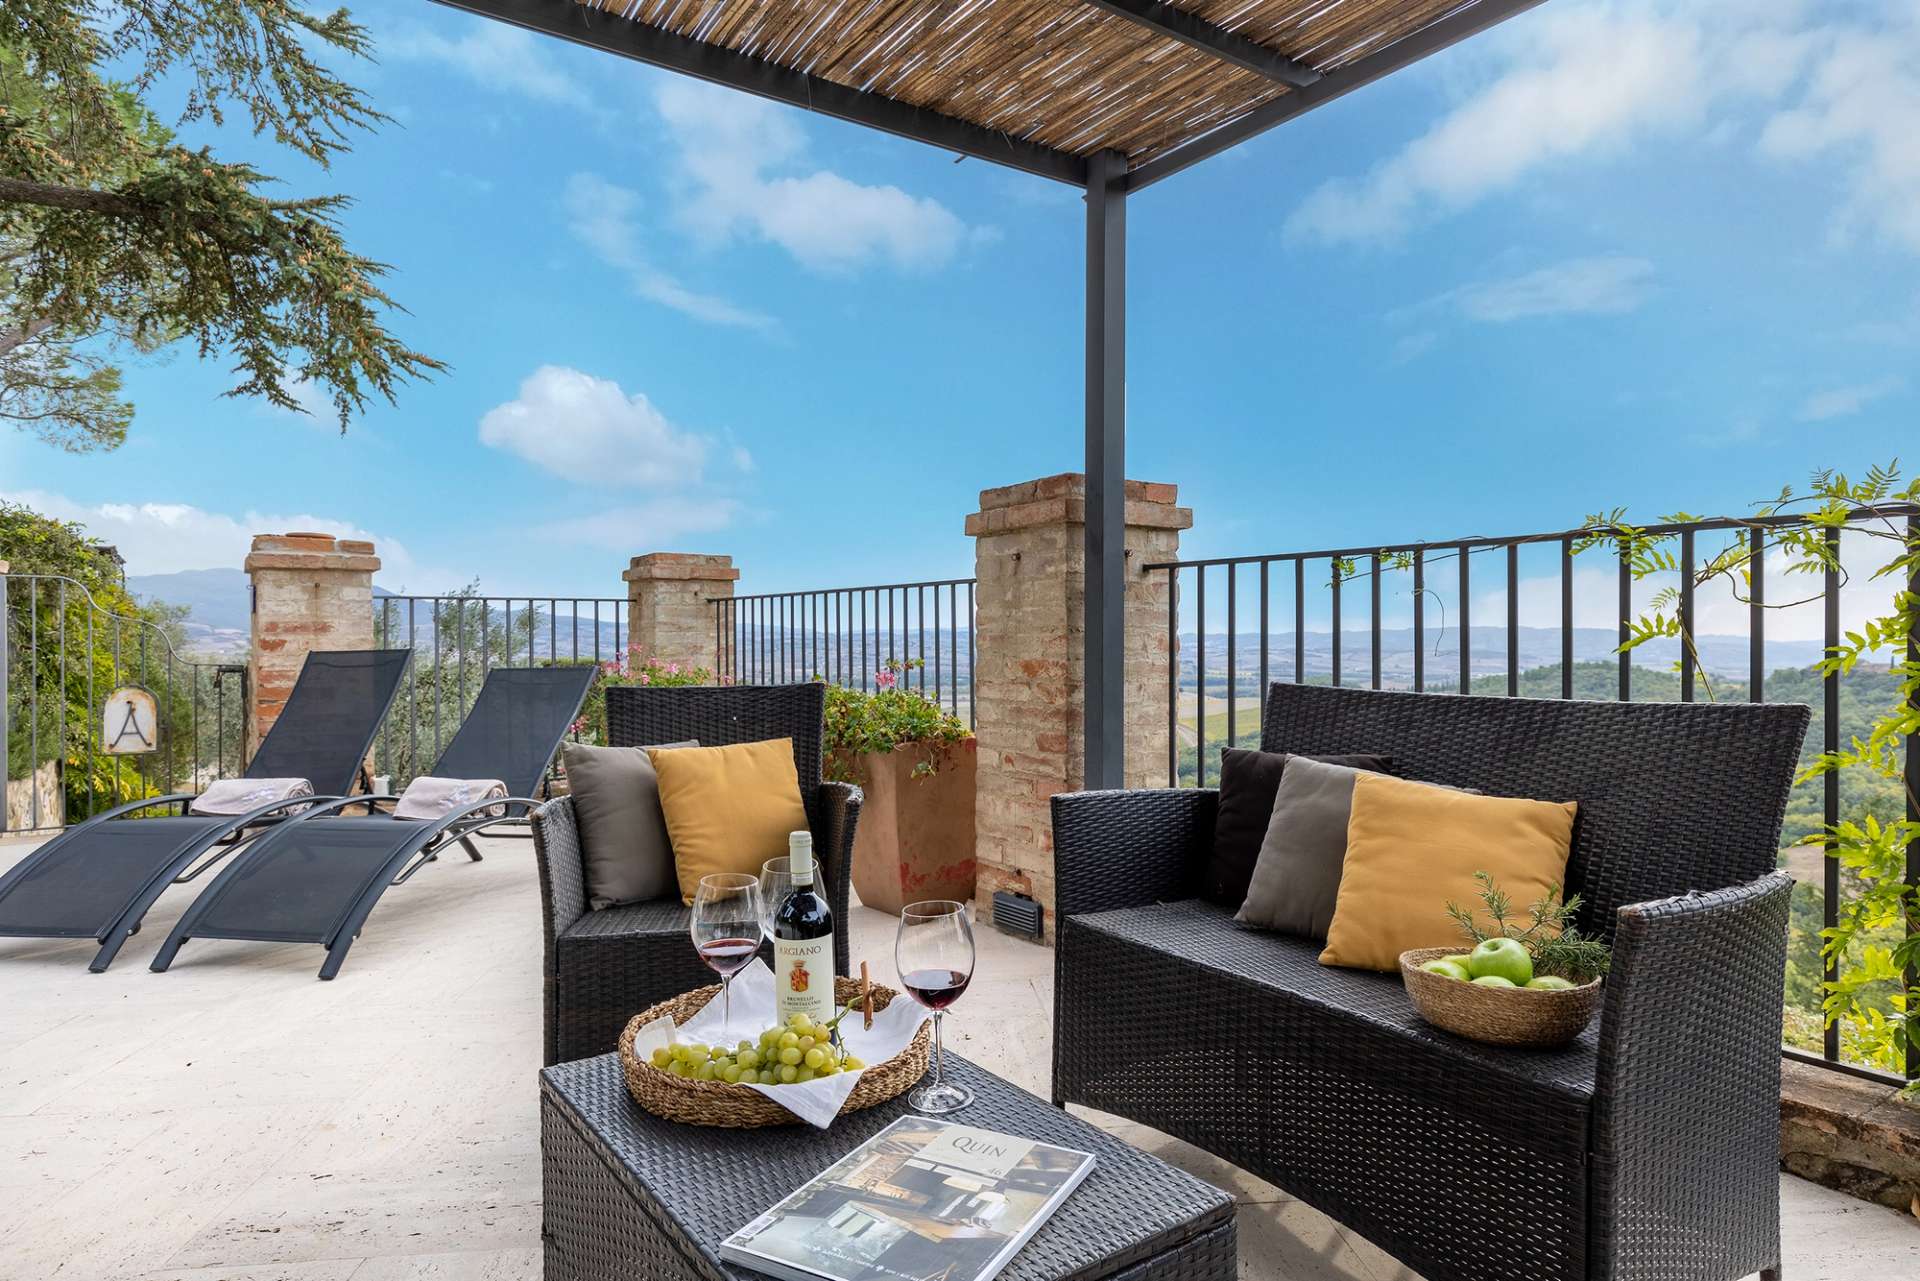 Seaside terrace of a luxury villa for rent in Italy